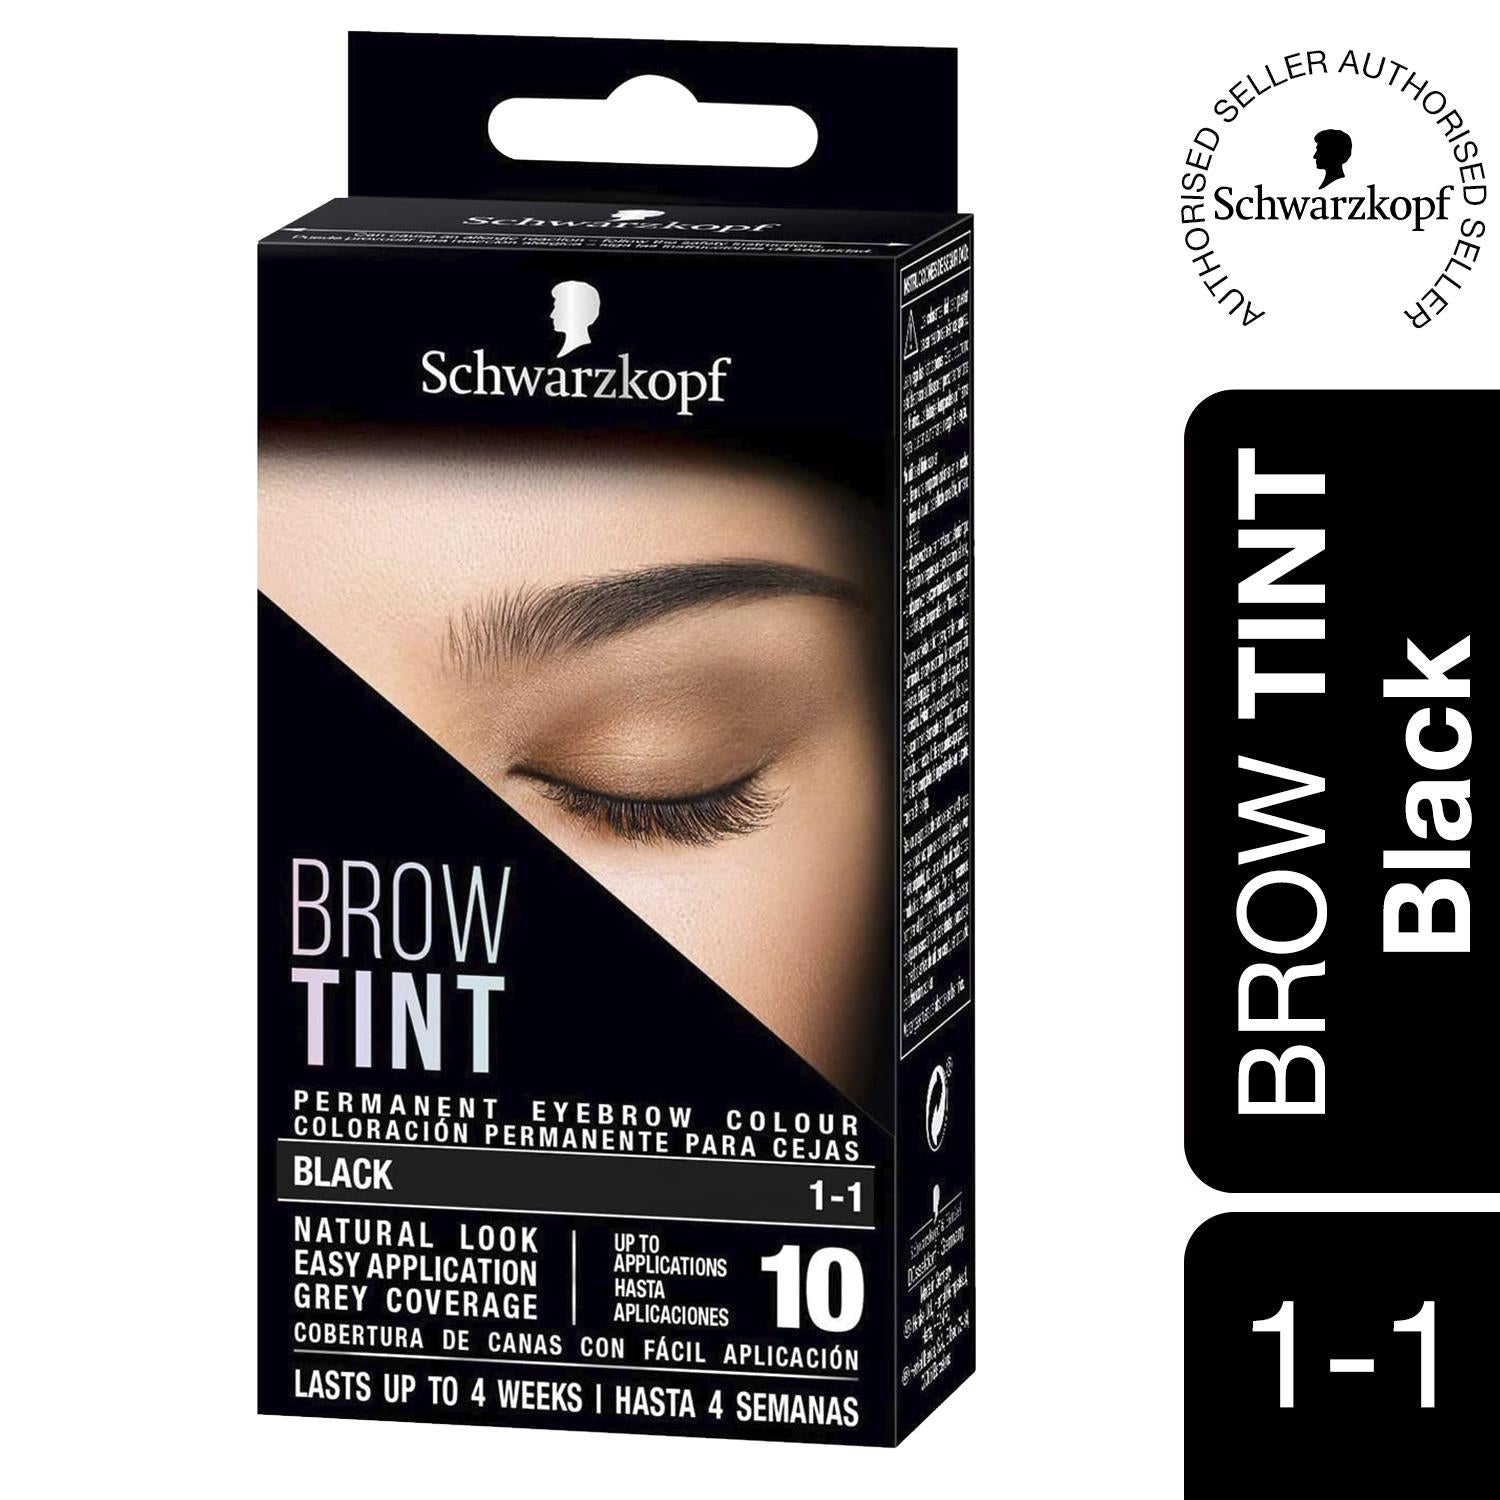 Schwarzkopf Brow Tint Professional Formula Permanent Eyebrow Dye, 1-1 Black